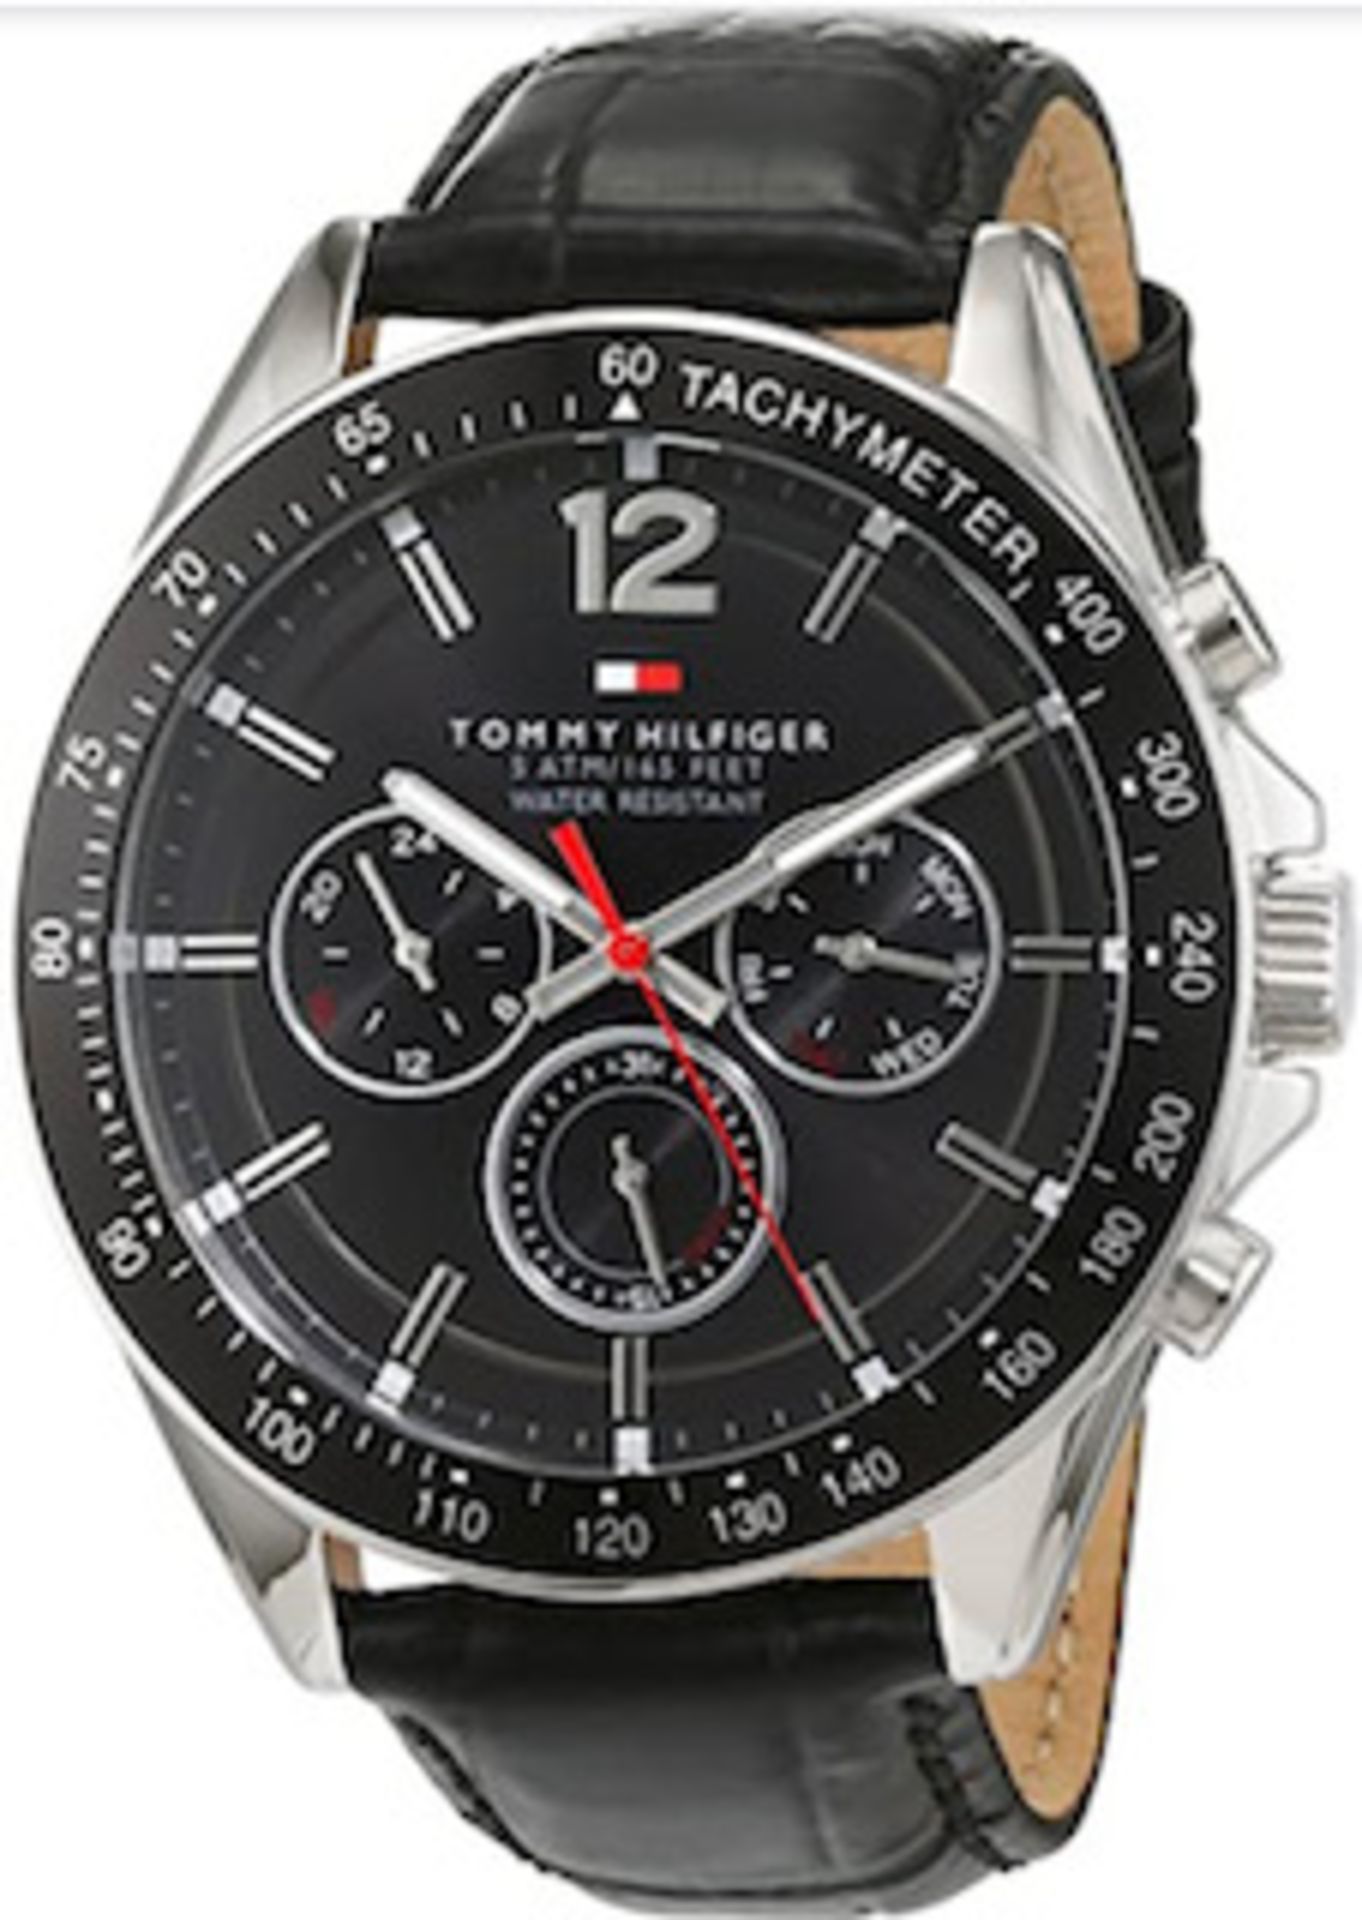 Tommy Hilfiger 1791117 Men's Black Dial Black Leather Watch - Image 2 of 8